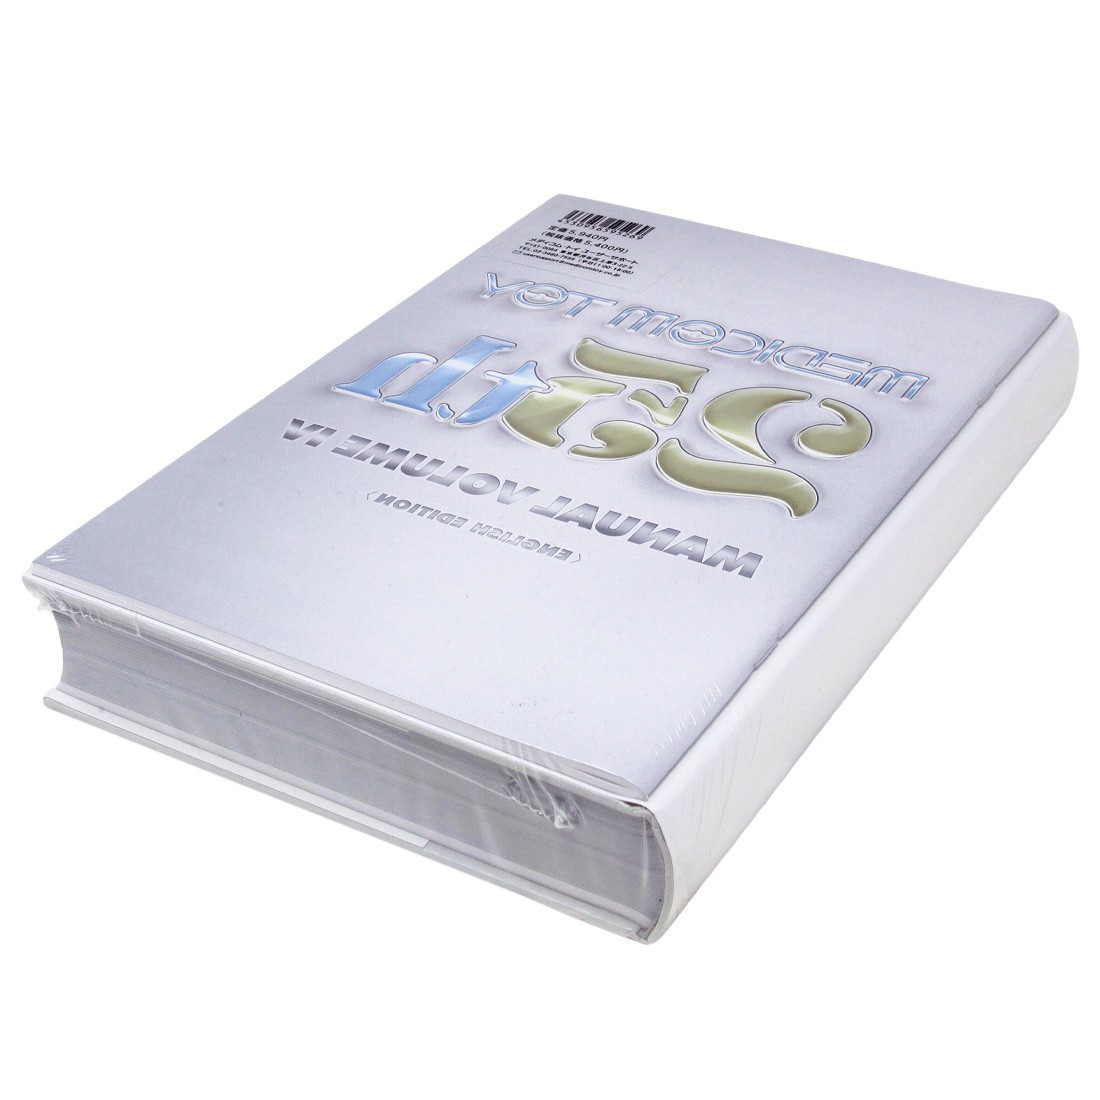 Medicom Toy 25th Anniversary Book - Manual Volume IV (white)